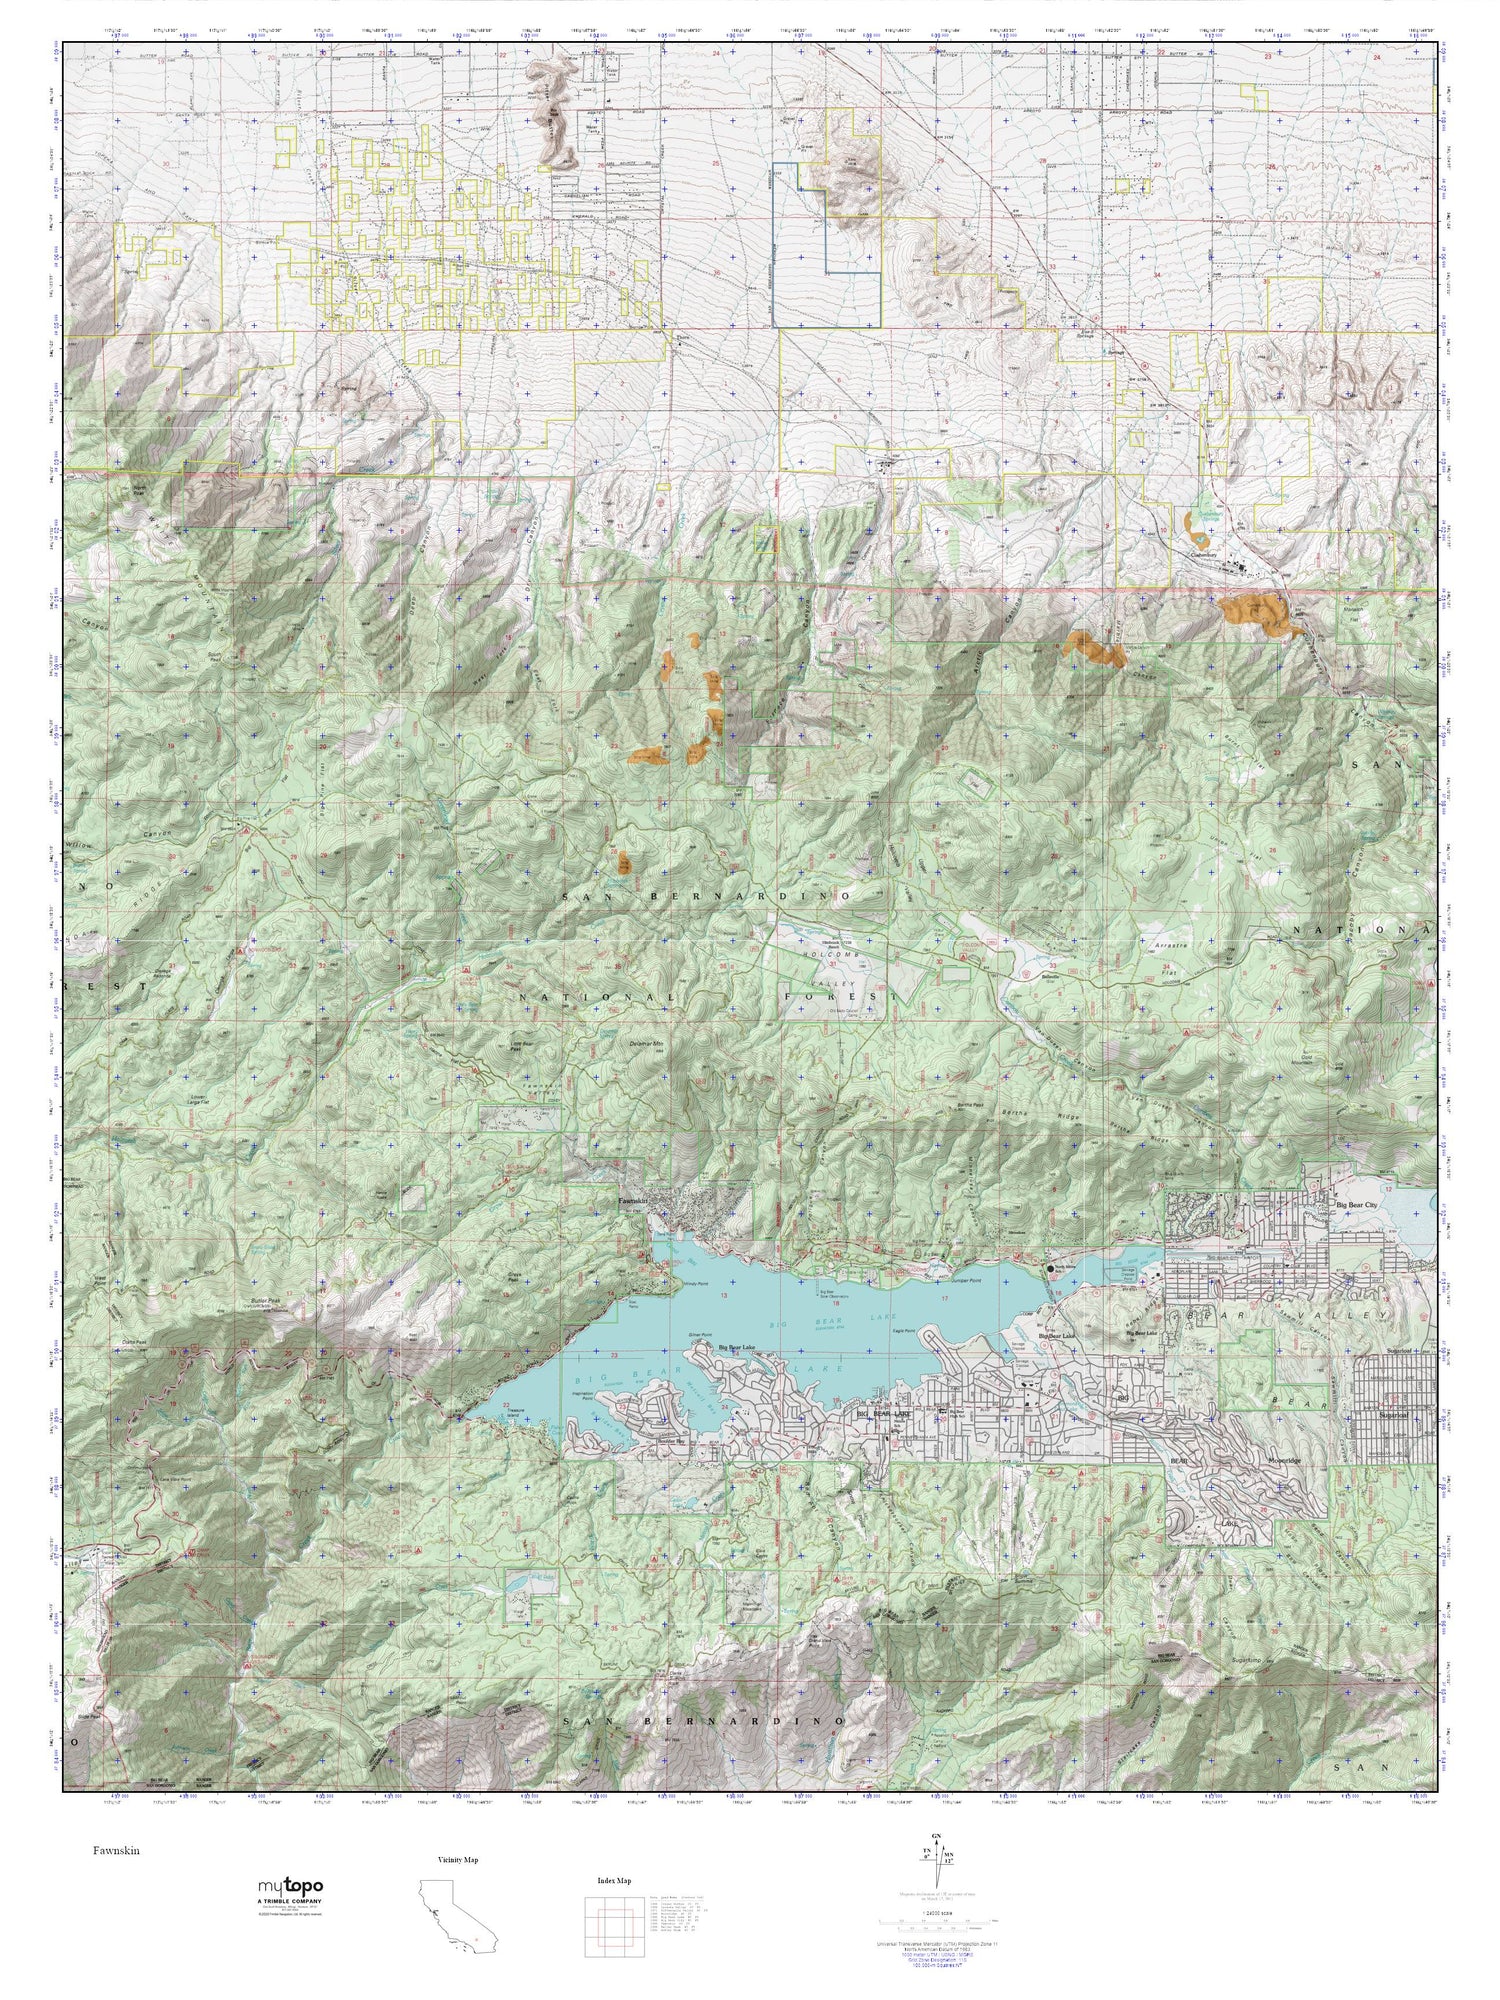 Fawnskin MyTopo Explorer Series Map Image